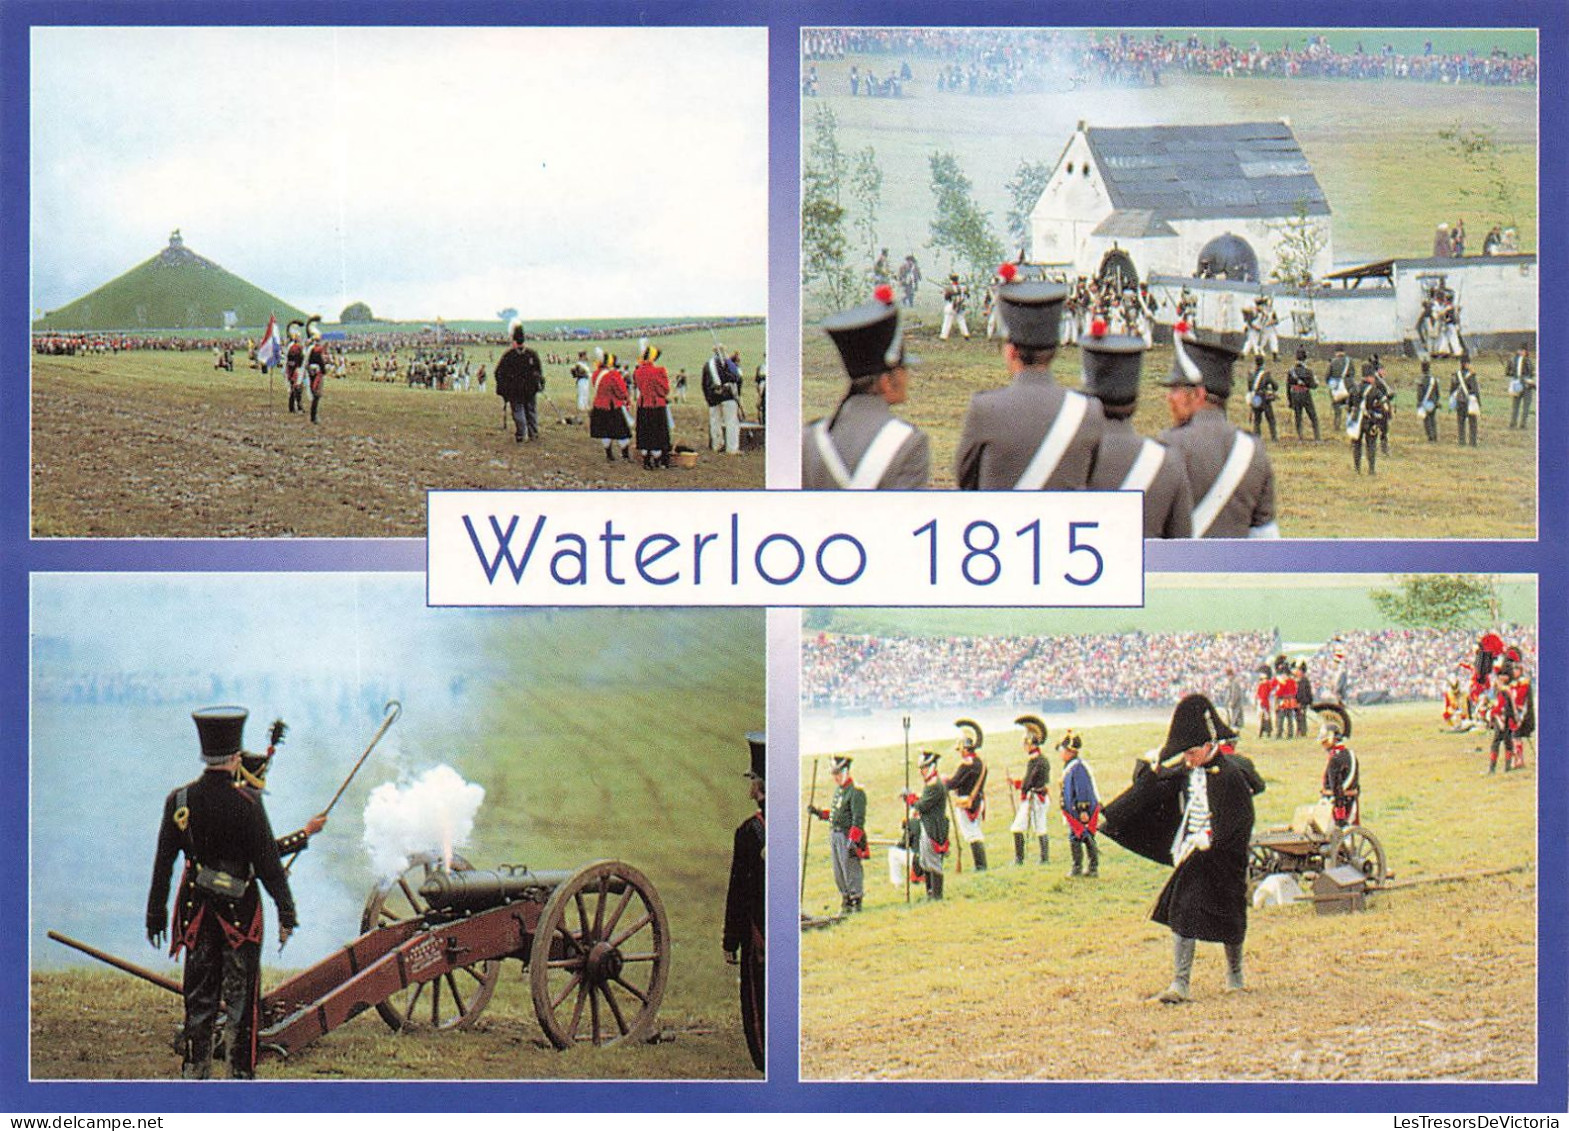 BELGIQUE - Un Bonjour De Waterloo - Waterloo 1815 - Multi-vues - Militaires - Carte Postale Ancienne - Waterloo